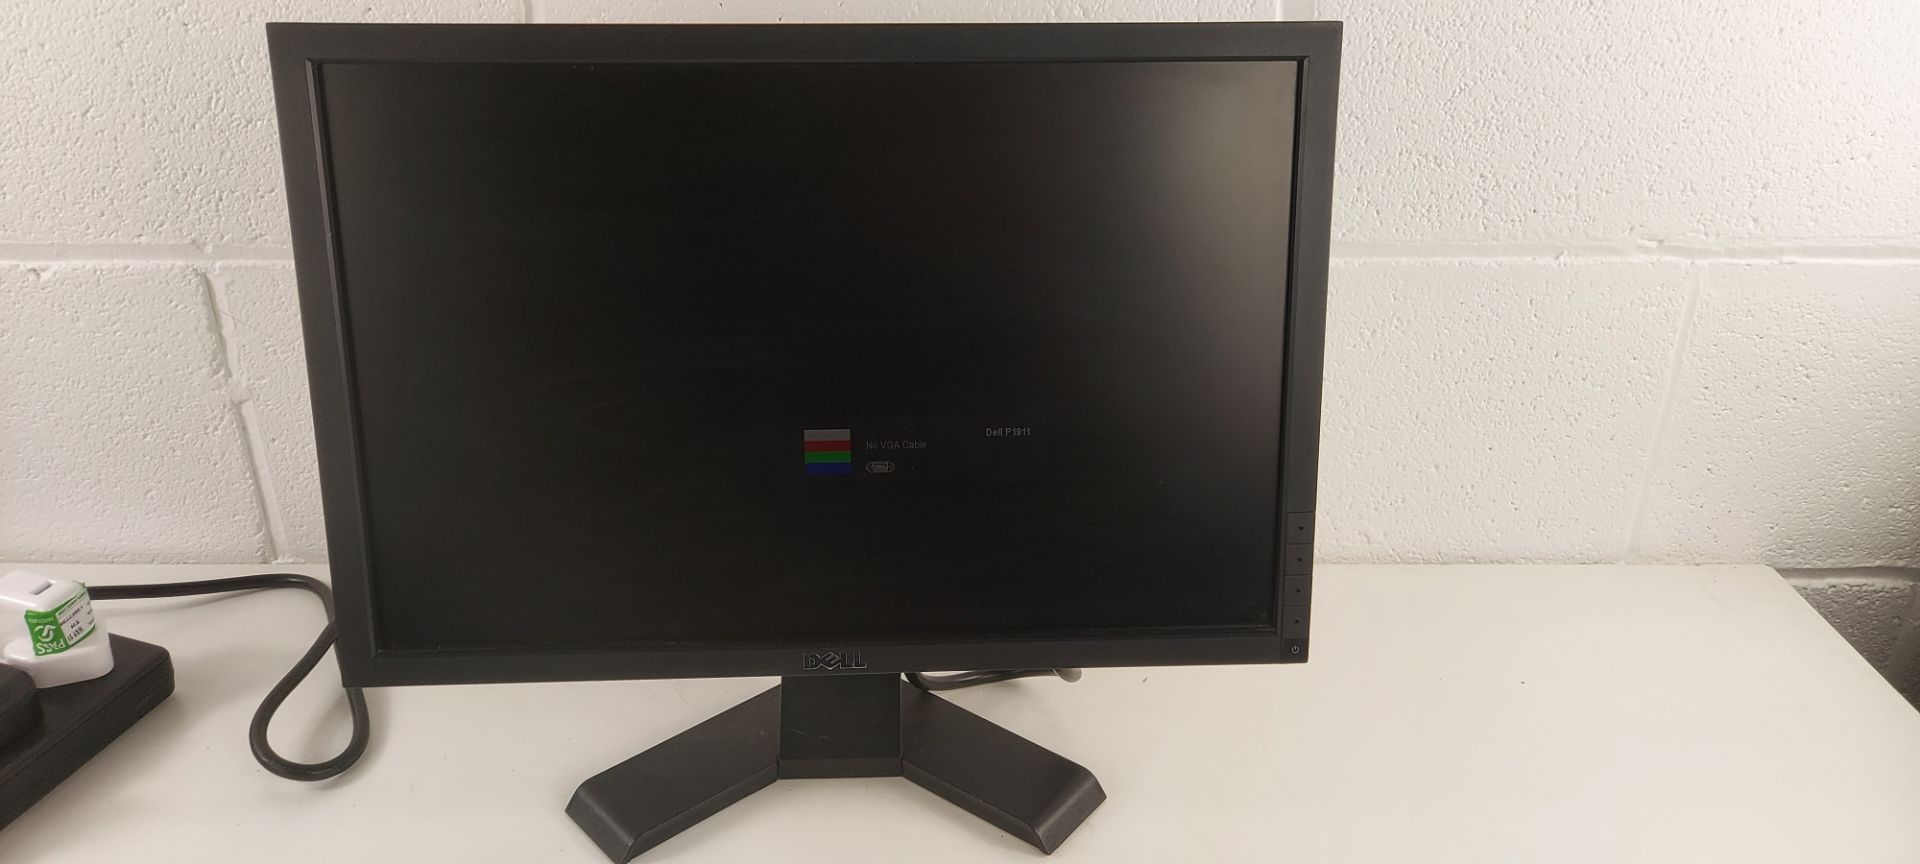 Dell Monitor Professional P1911, 19", LCD Widescreen